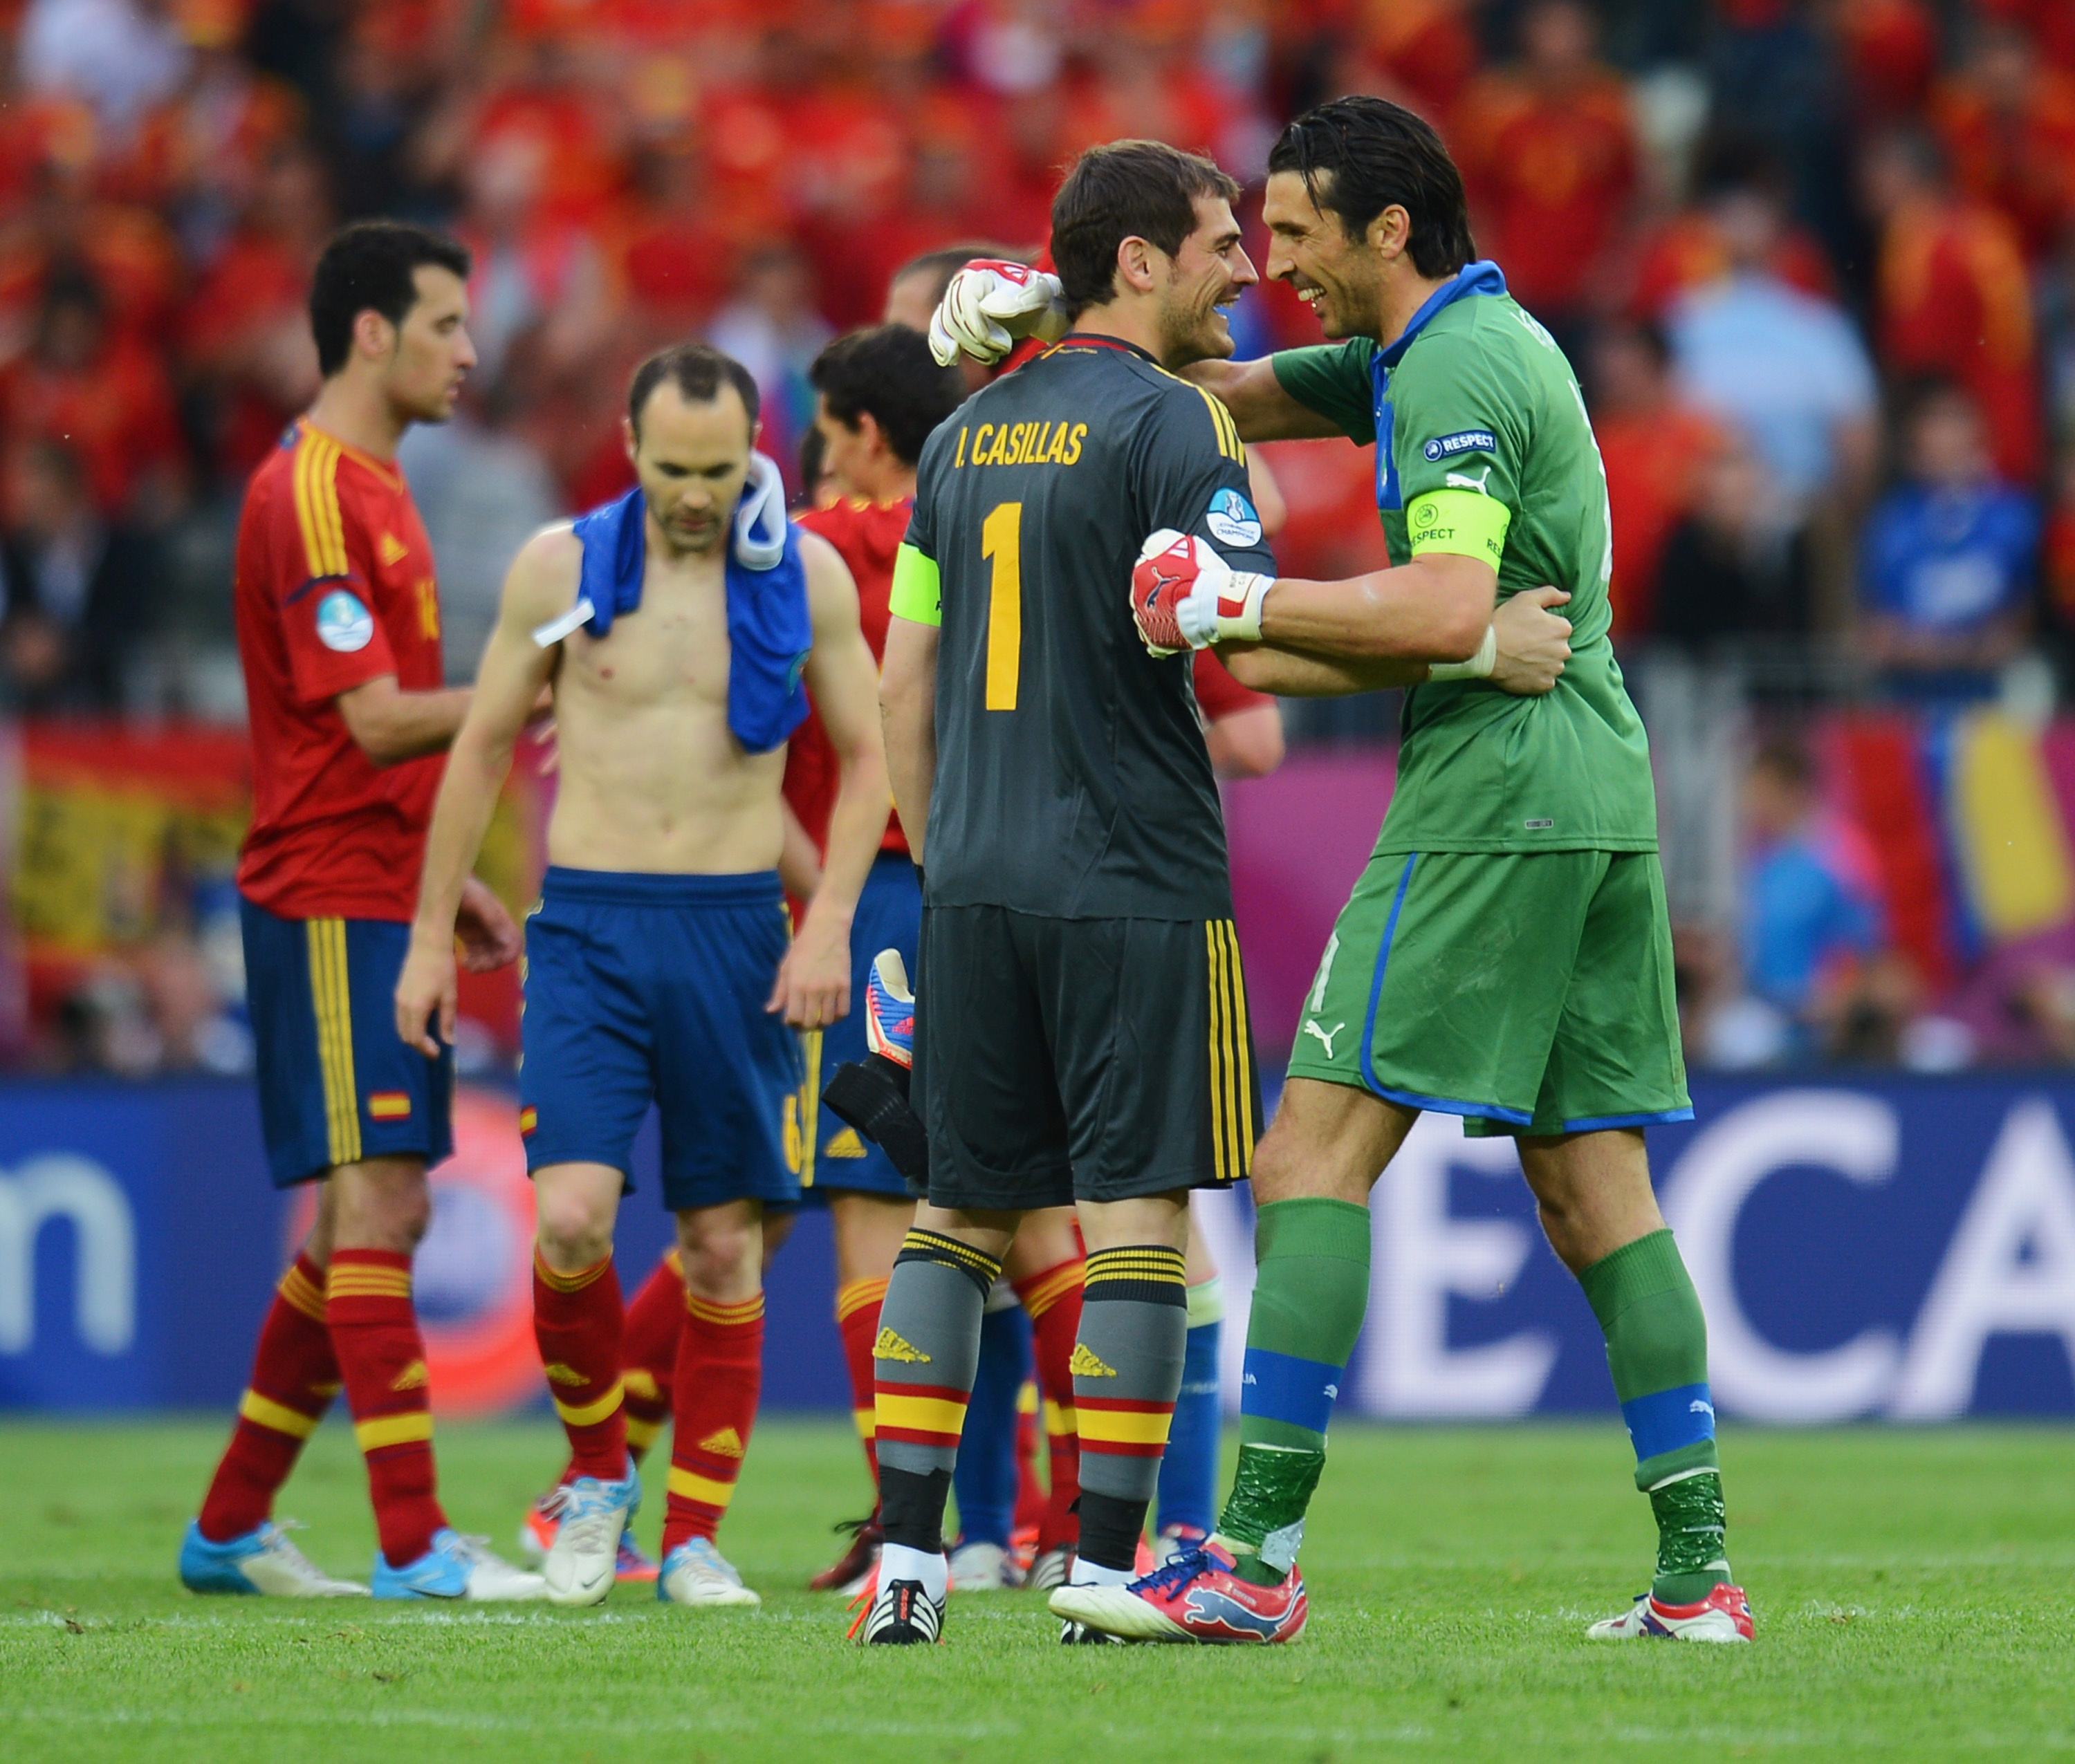 Fotboll, EM, Italien, Iker Casillas, Gianluigi Buffon, Spanien